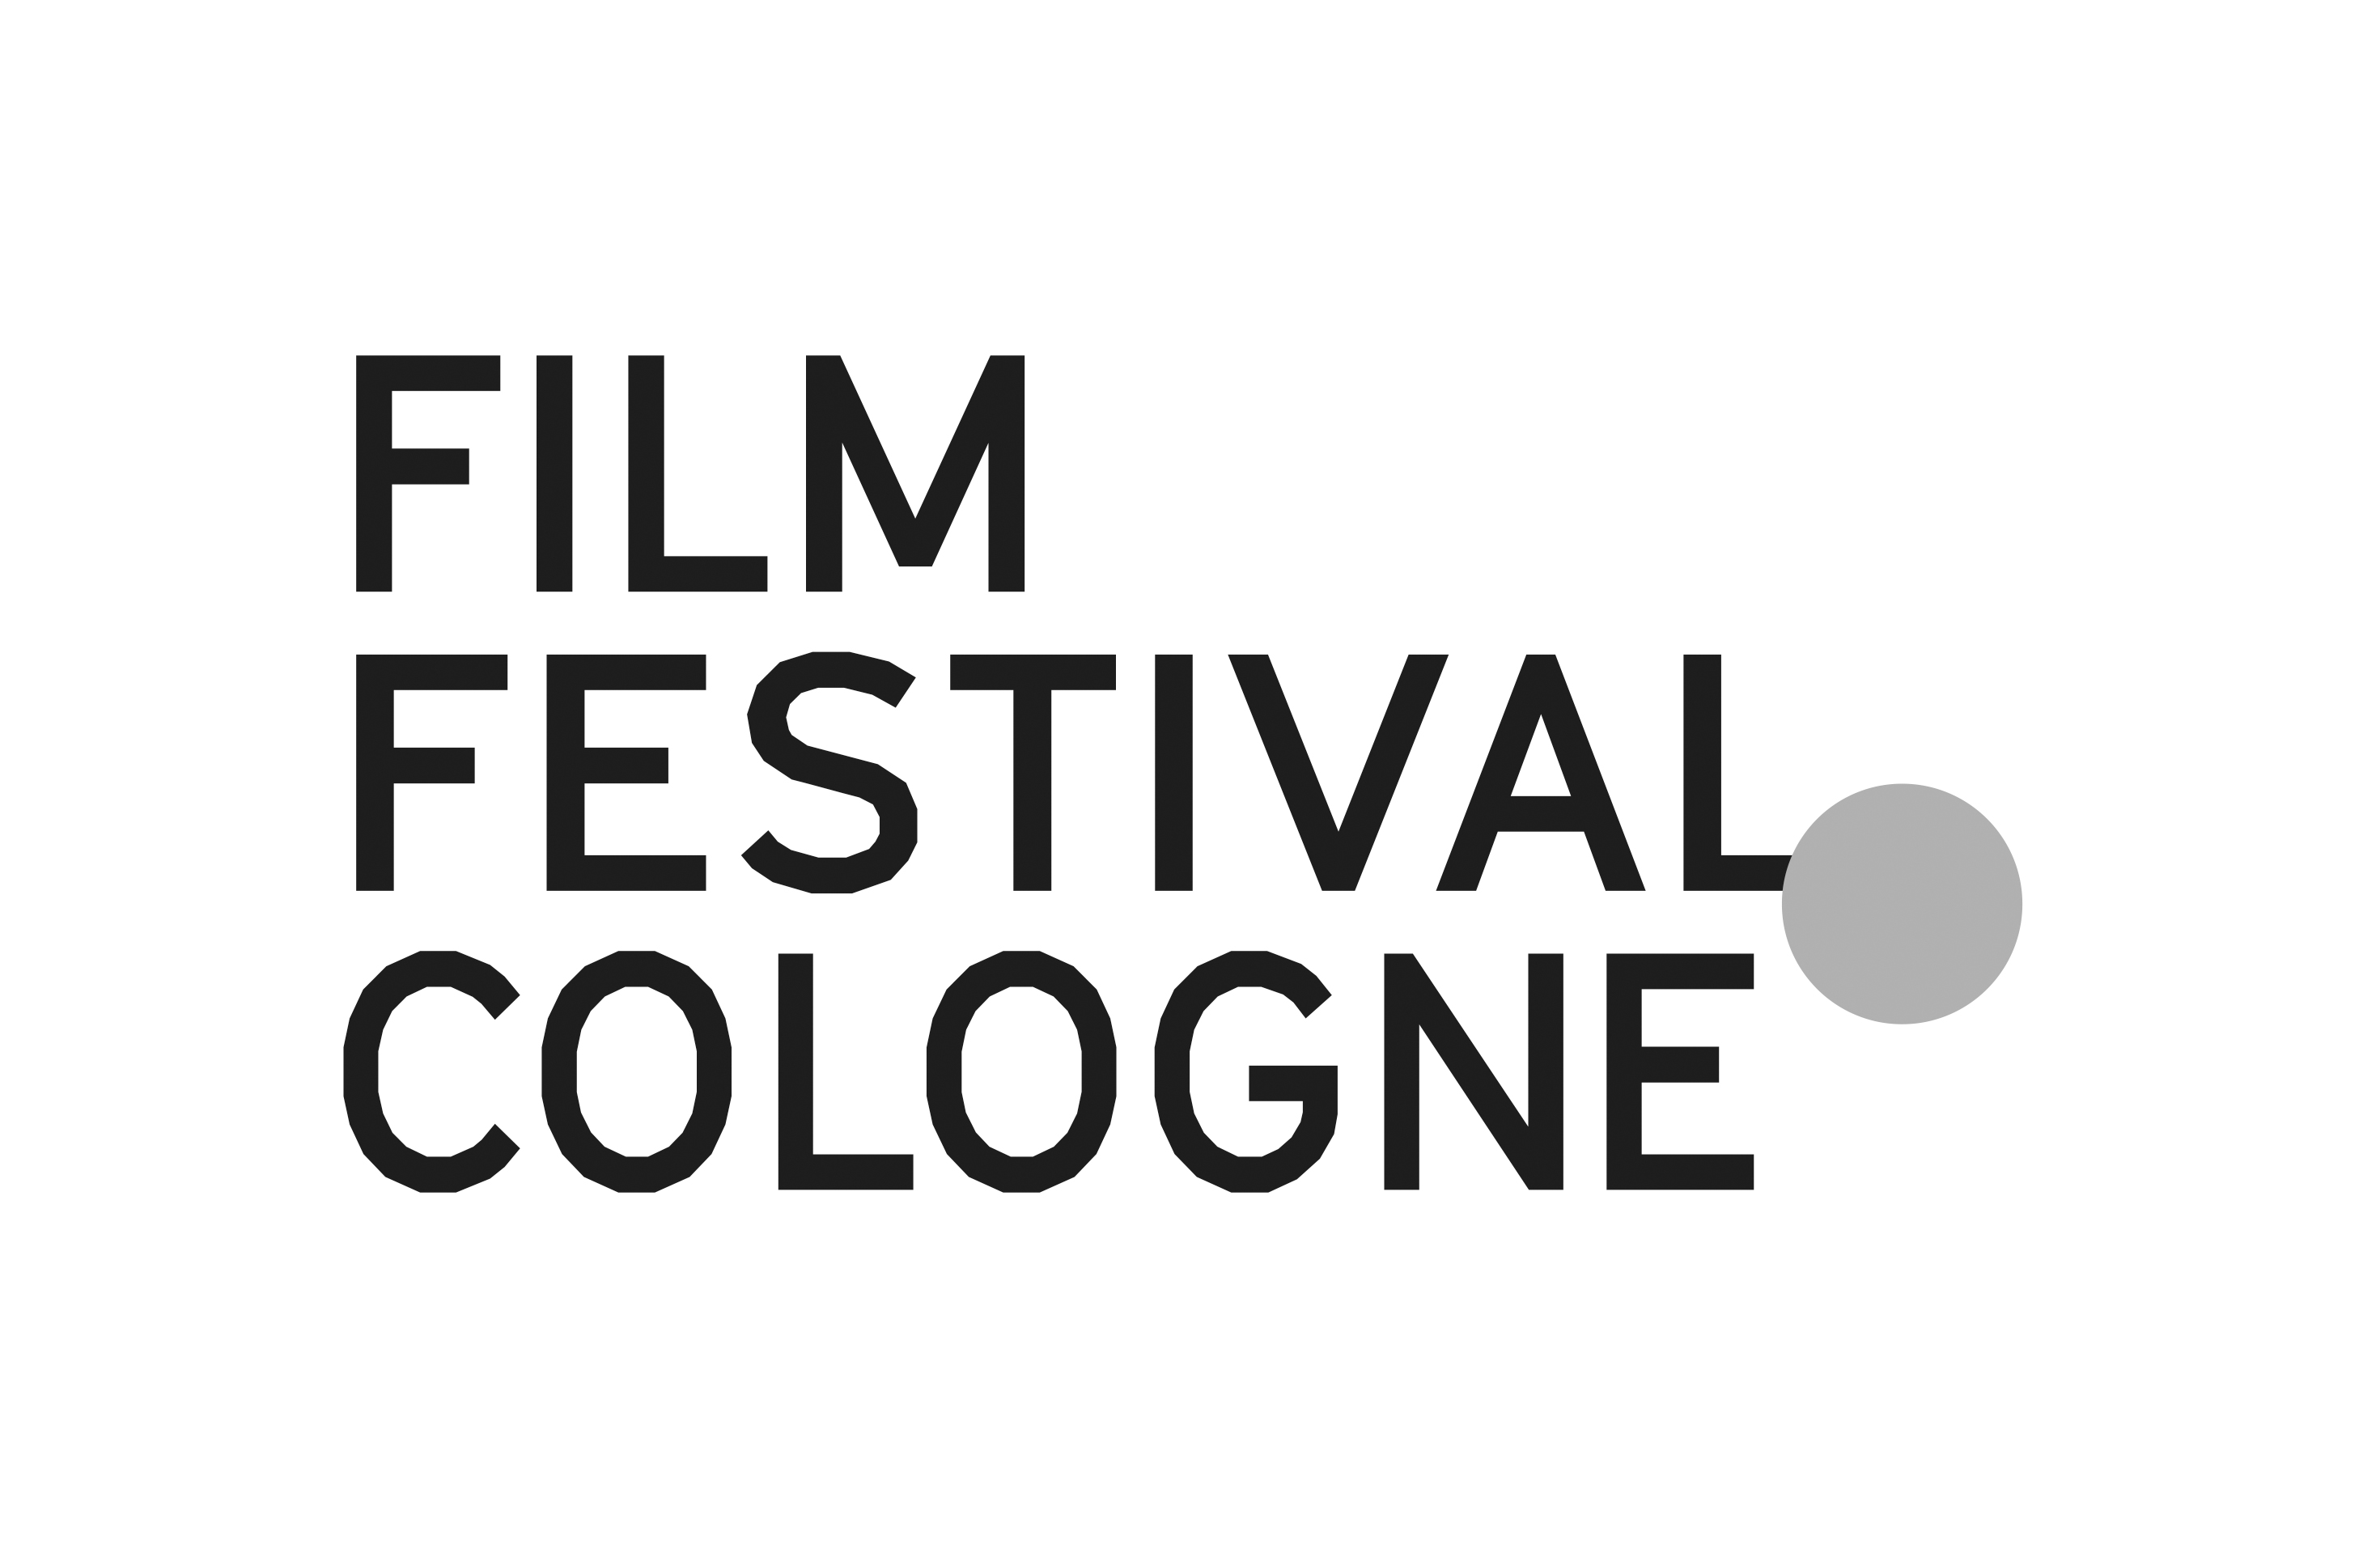 Film Festival Cologne